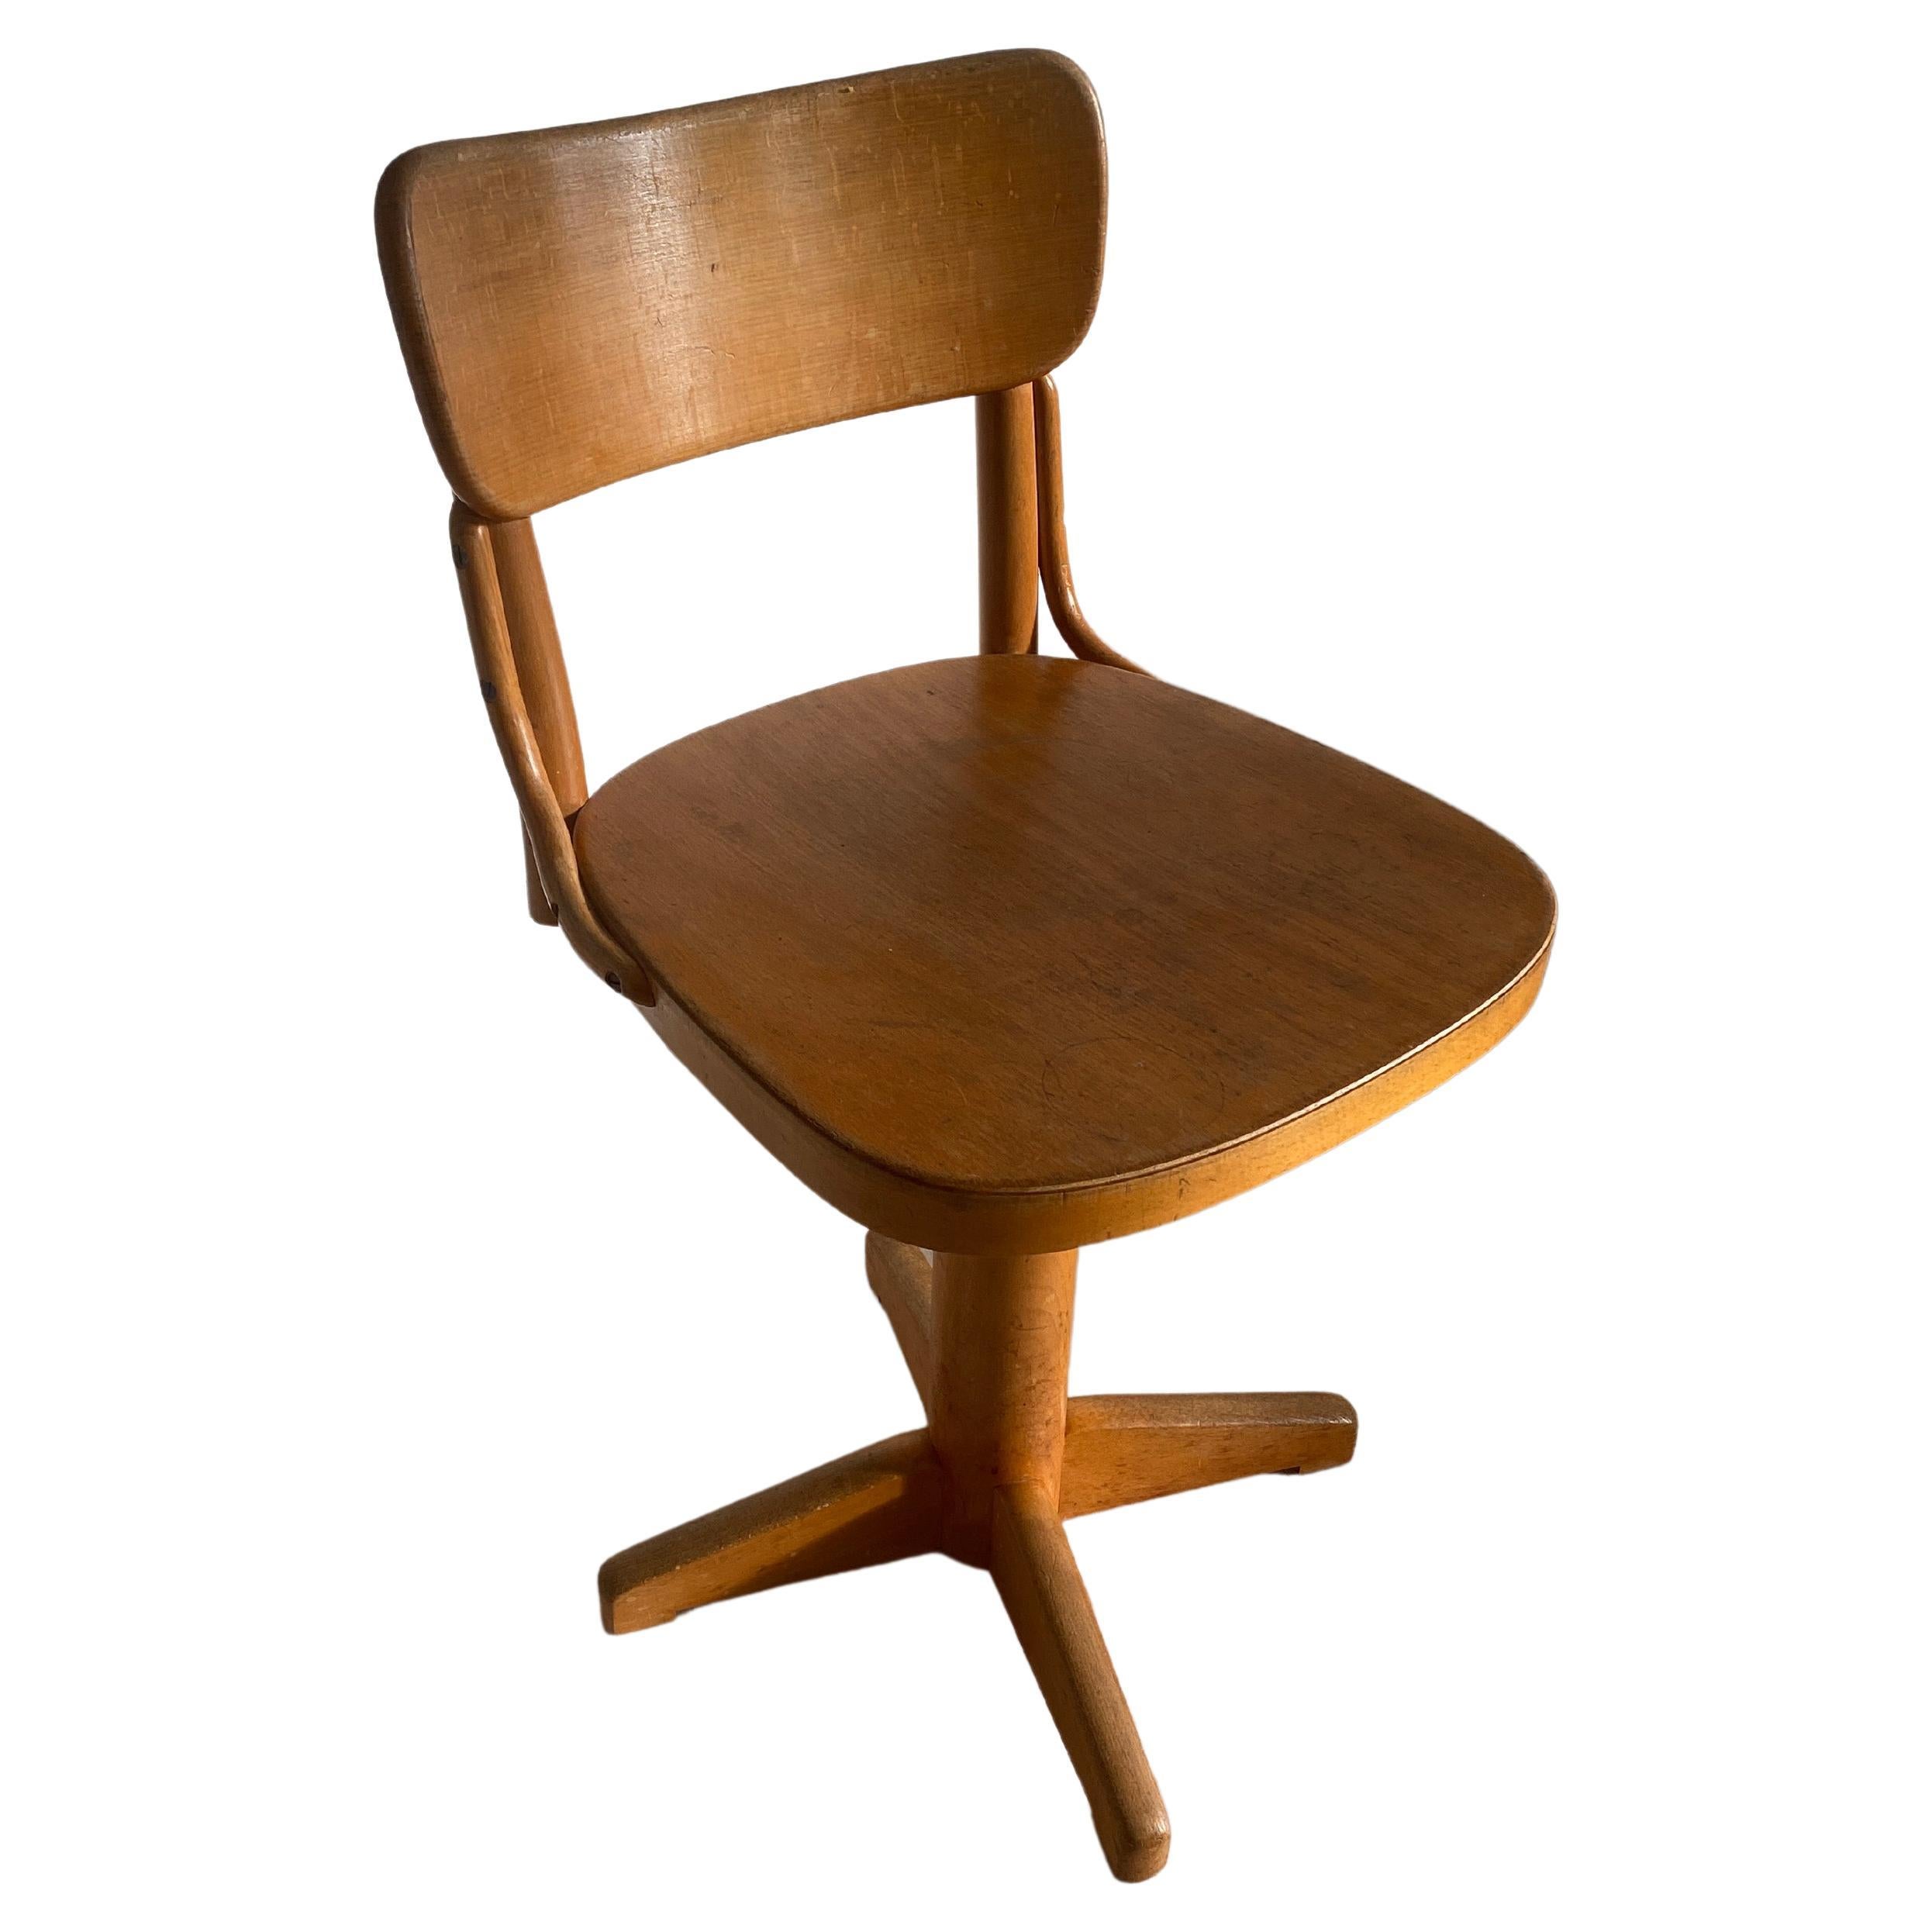 Fritz Hansen "DAN" Swivel Chair by Magnus Stephensen in Bentwood, 1930s For Sale